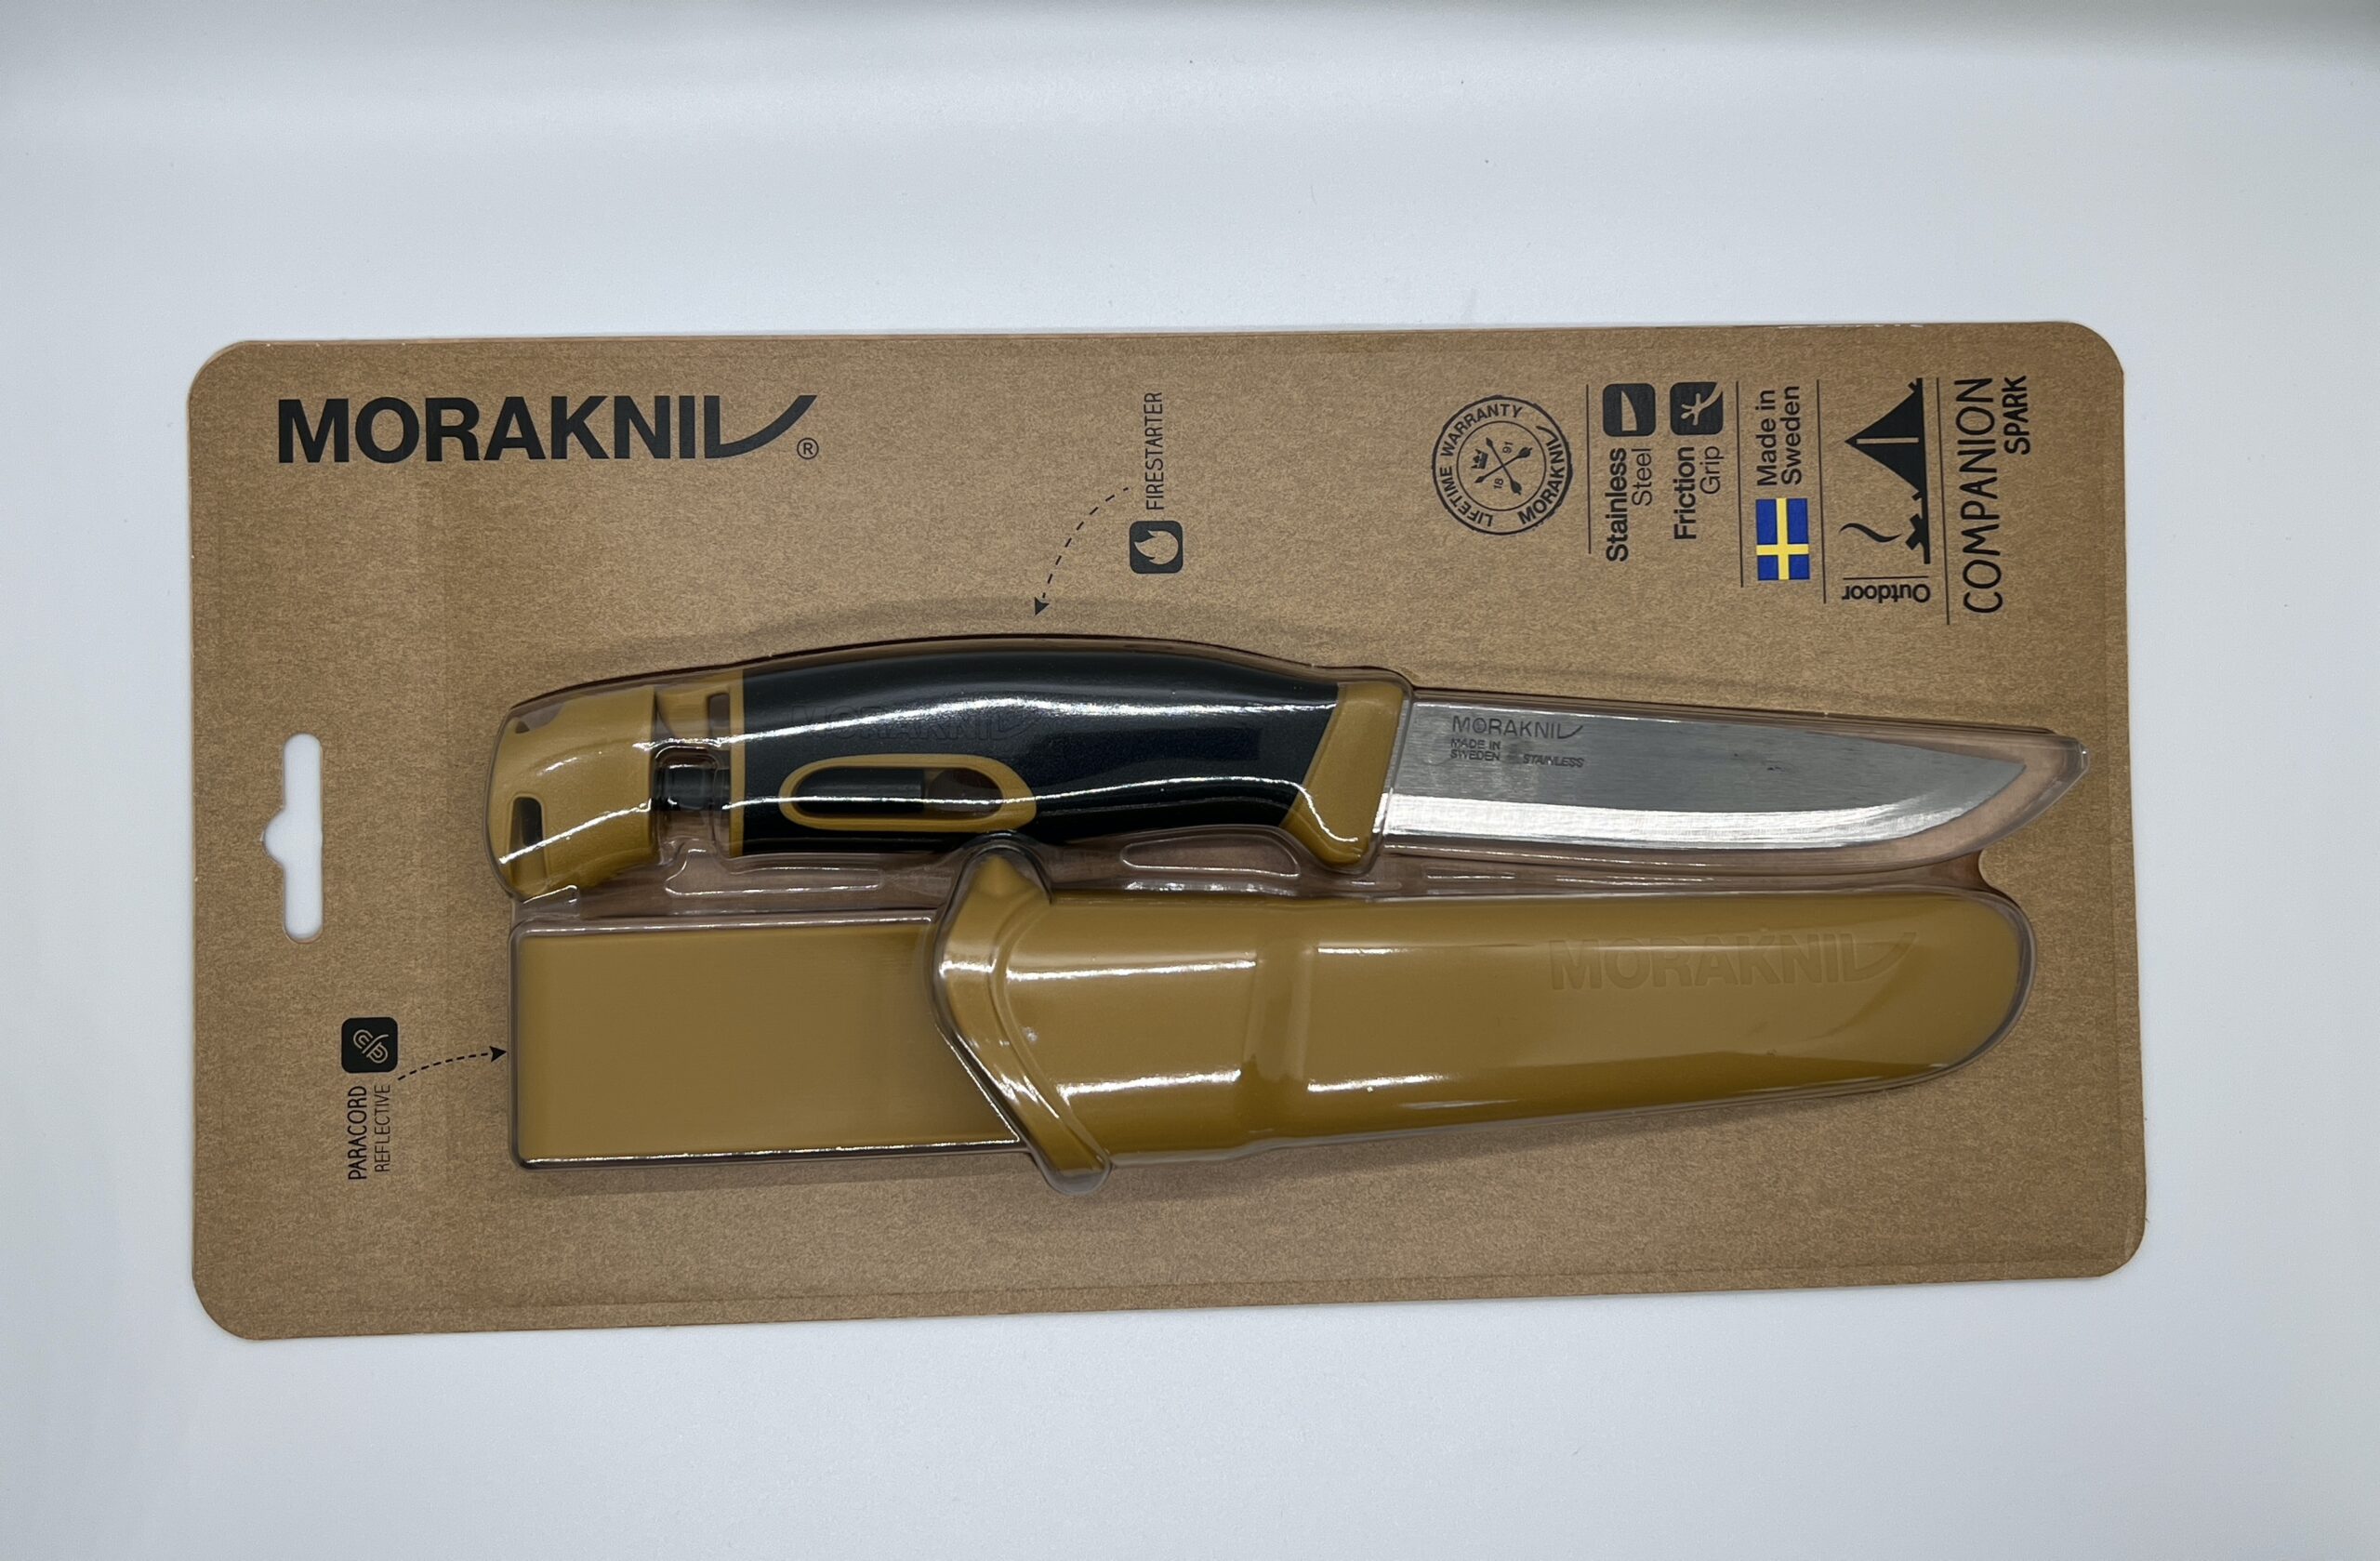 Morakniv Swedish survival knives compare all models